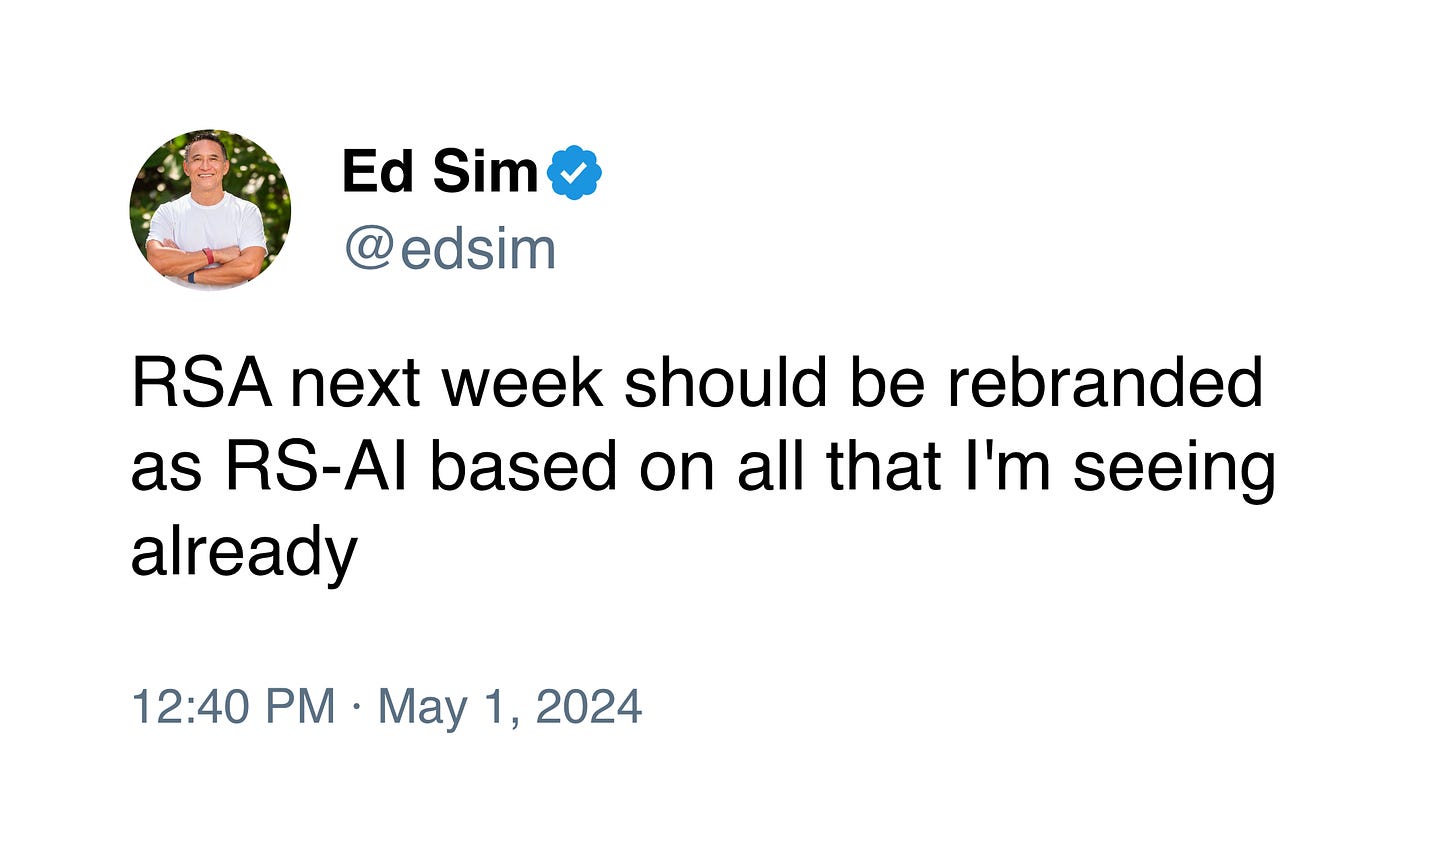 A tweet post by Ed Sim saying RSA should rebrand as RS-AI